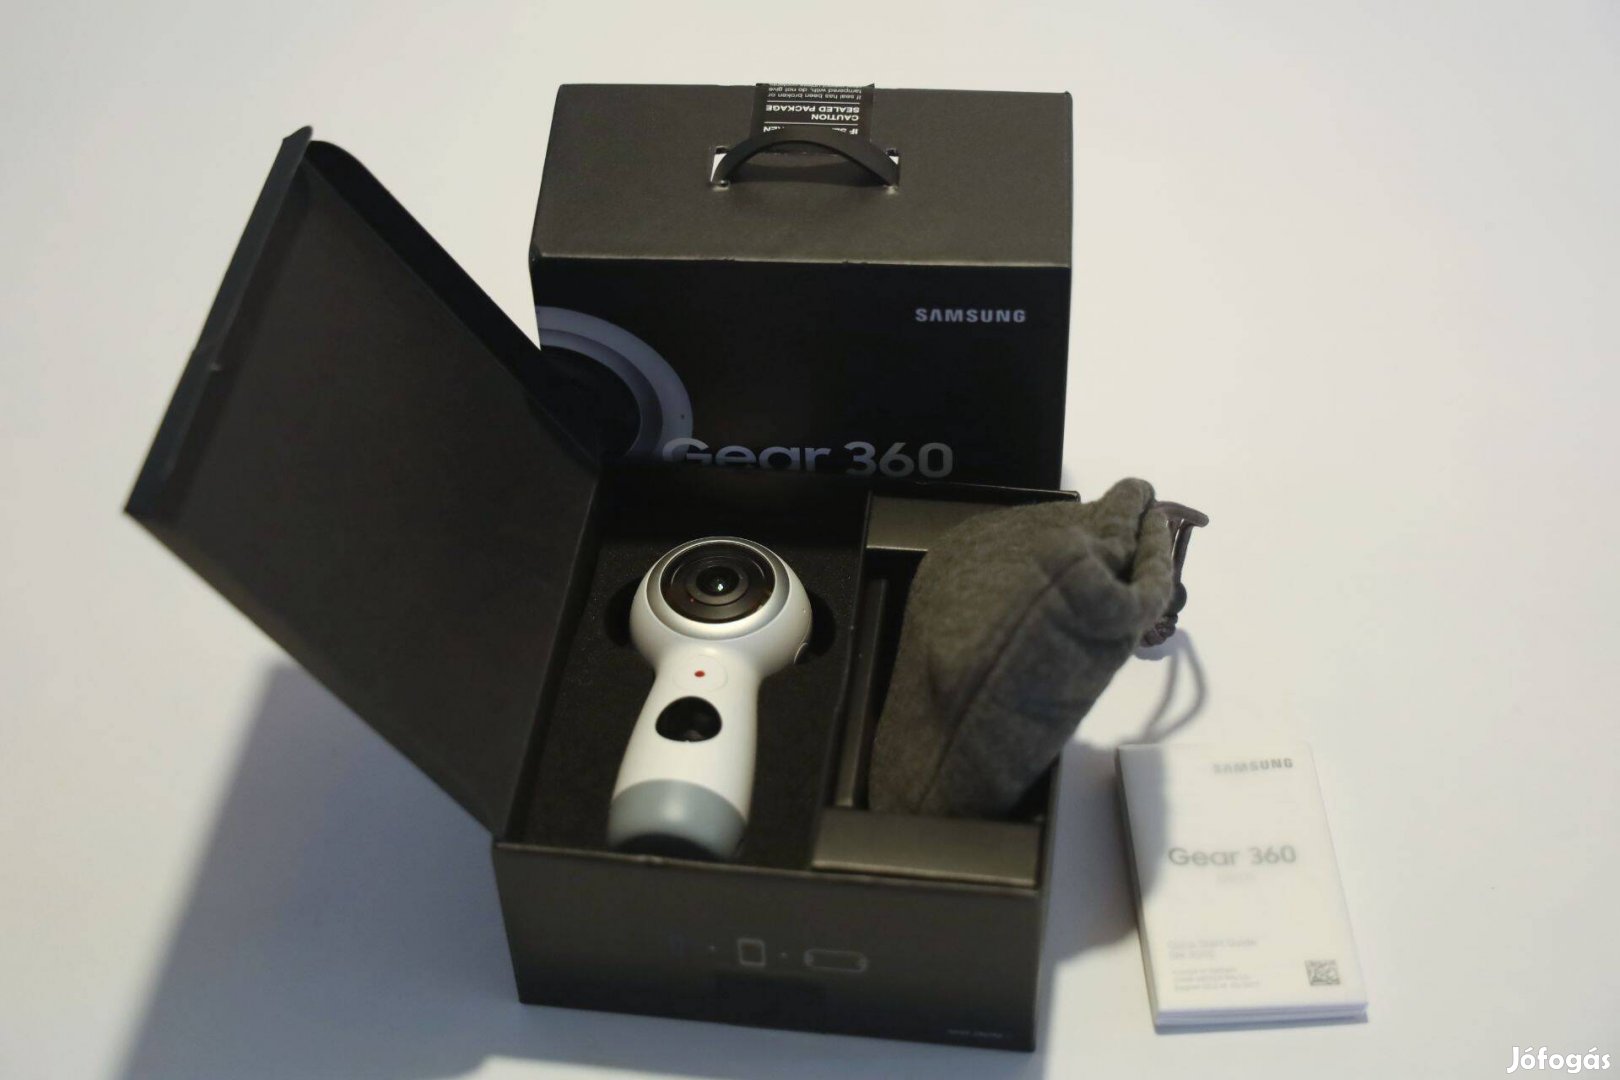 Samsung Gear 360 kamera eladó